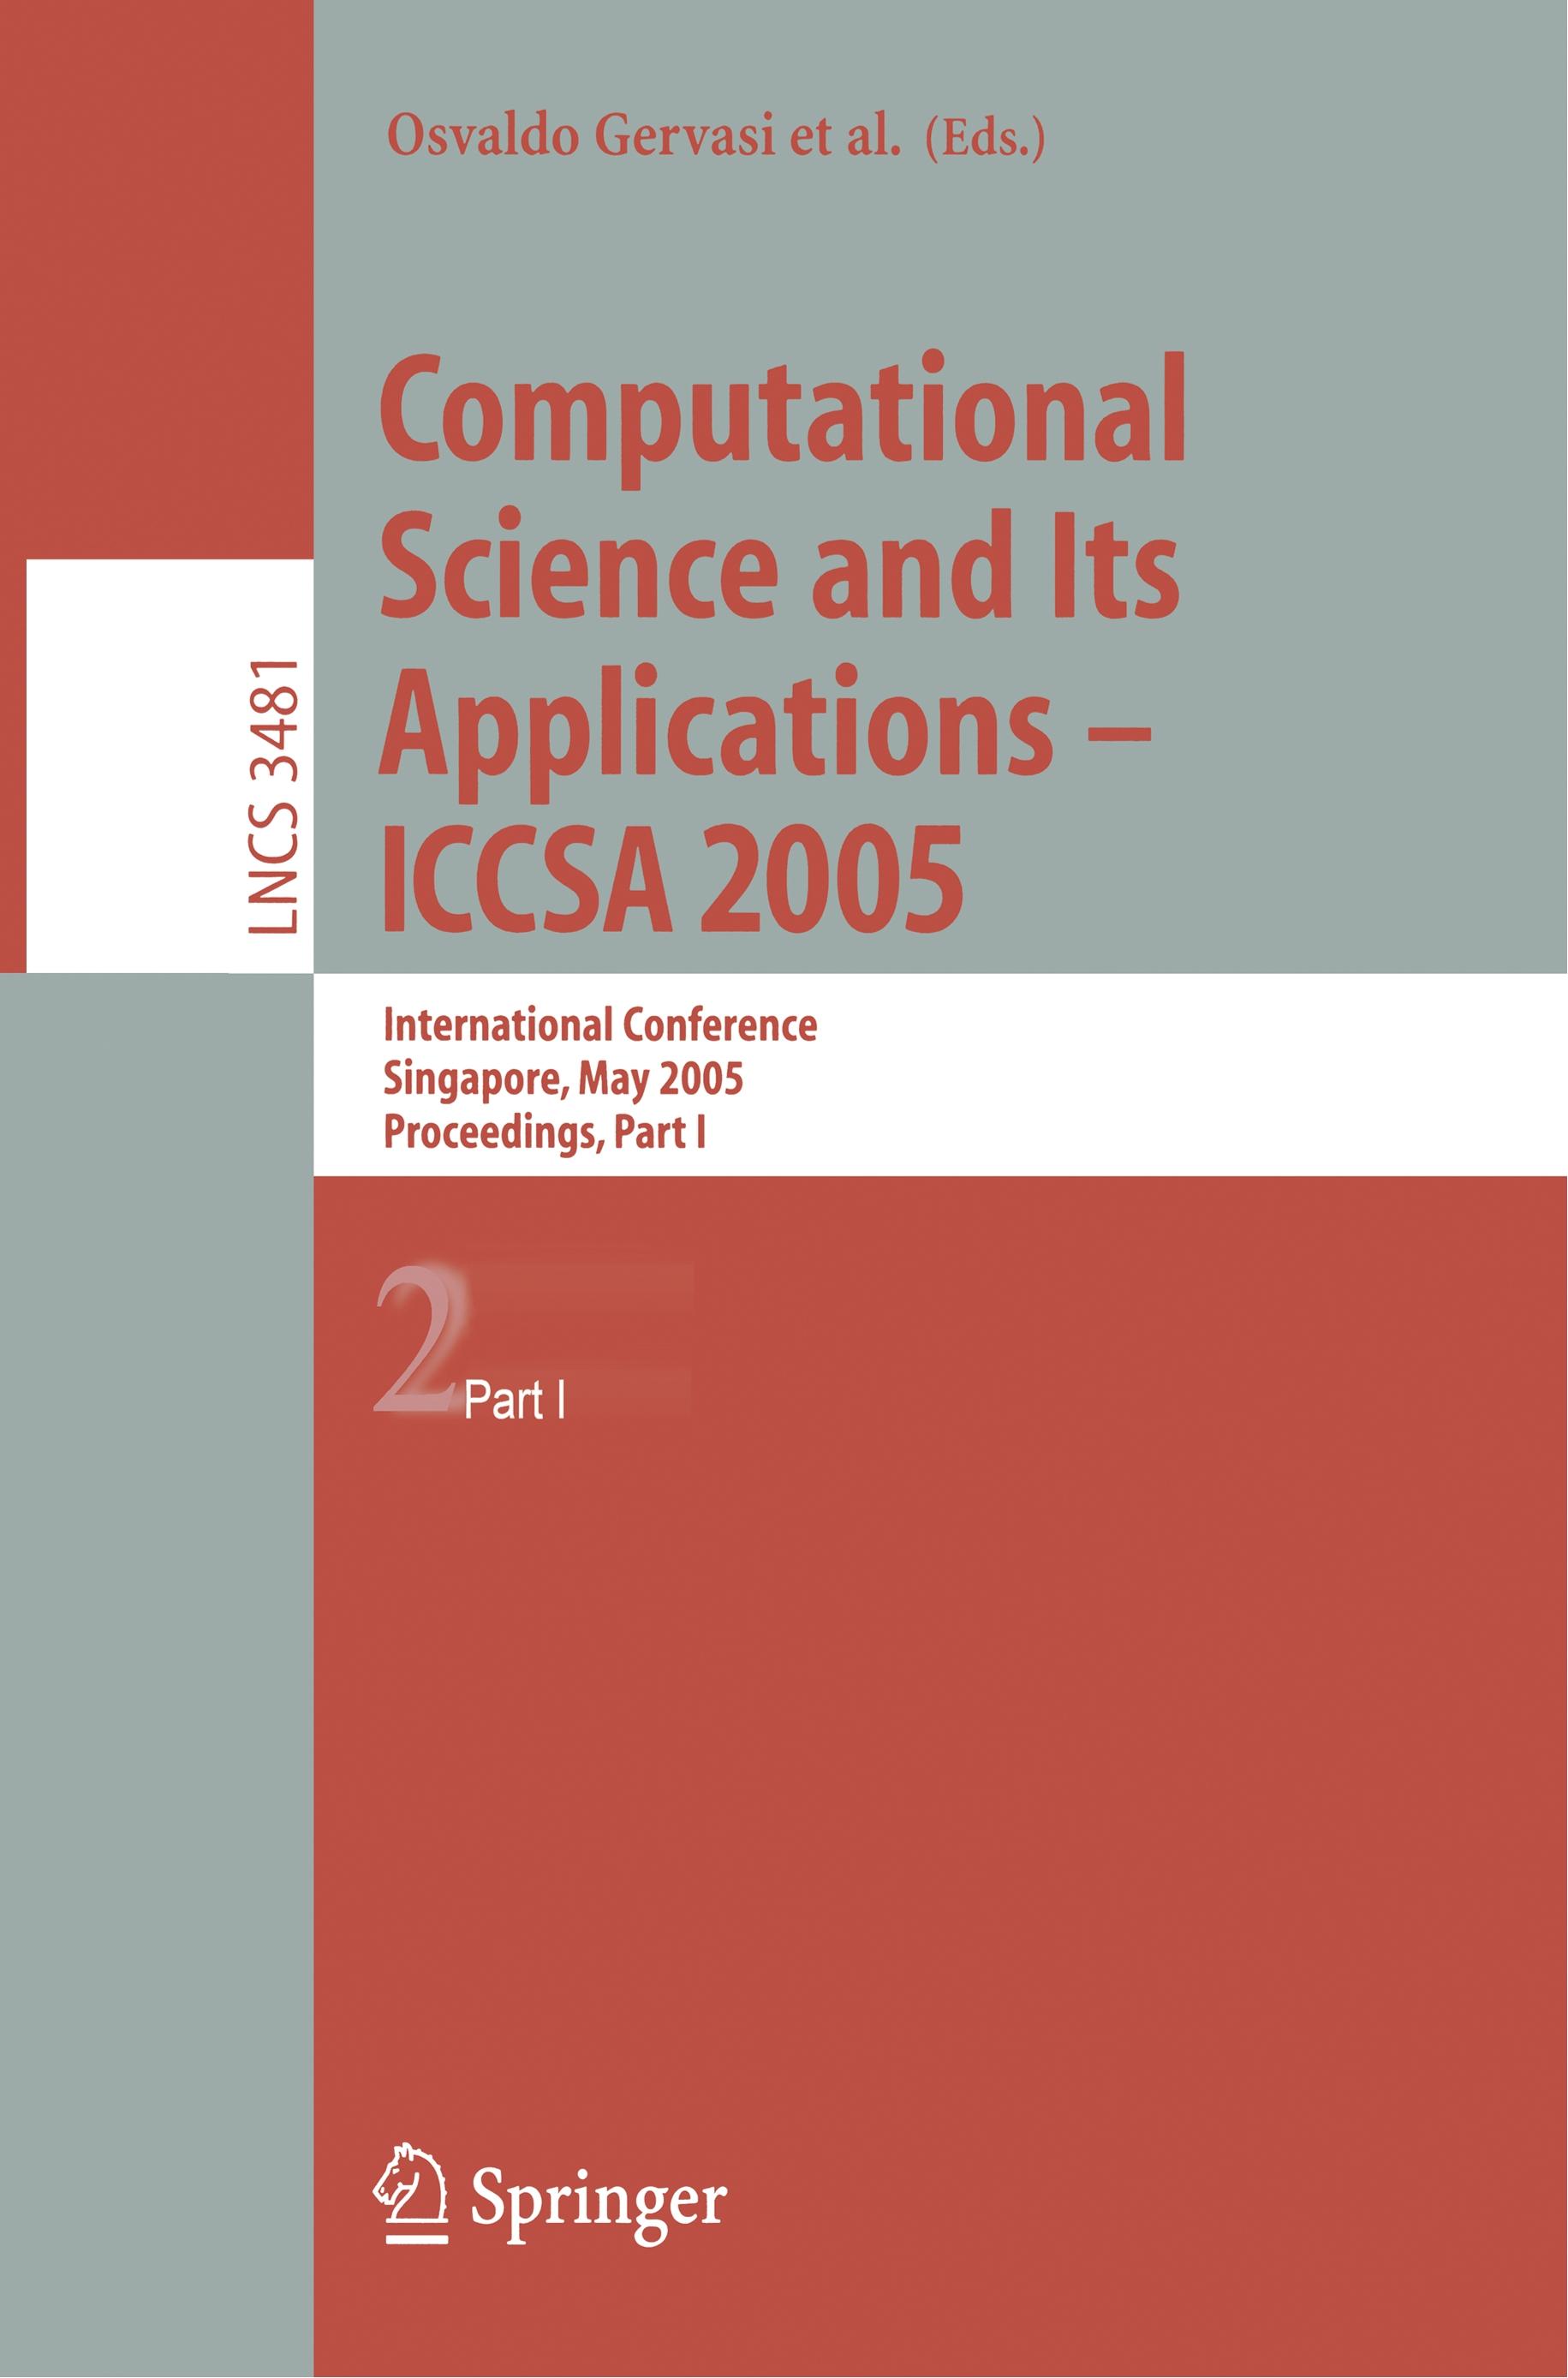 Computational Science and Its Applications - ICCSA 2005, 2 Teile. Vol.2 - Gervasi, Osvaldo|Gavrilova, Marina L.|Kumar, Vipin|Laganà, Antonio|Lee, Heow Pueh|Mun, Youngson|Taniar, David|Tan, Chih Jeng Kenneth